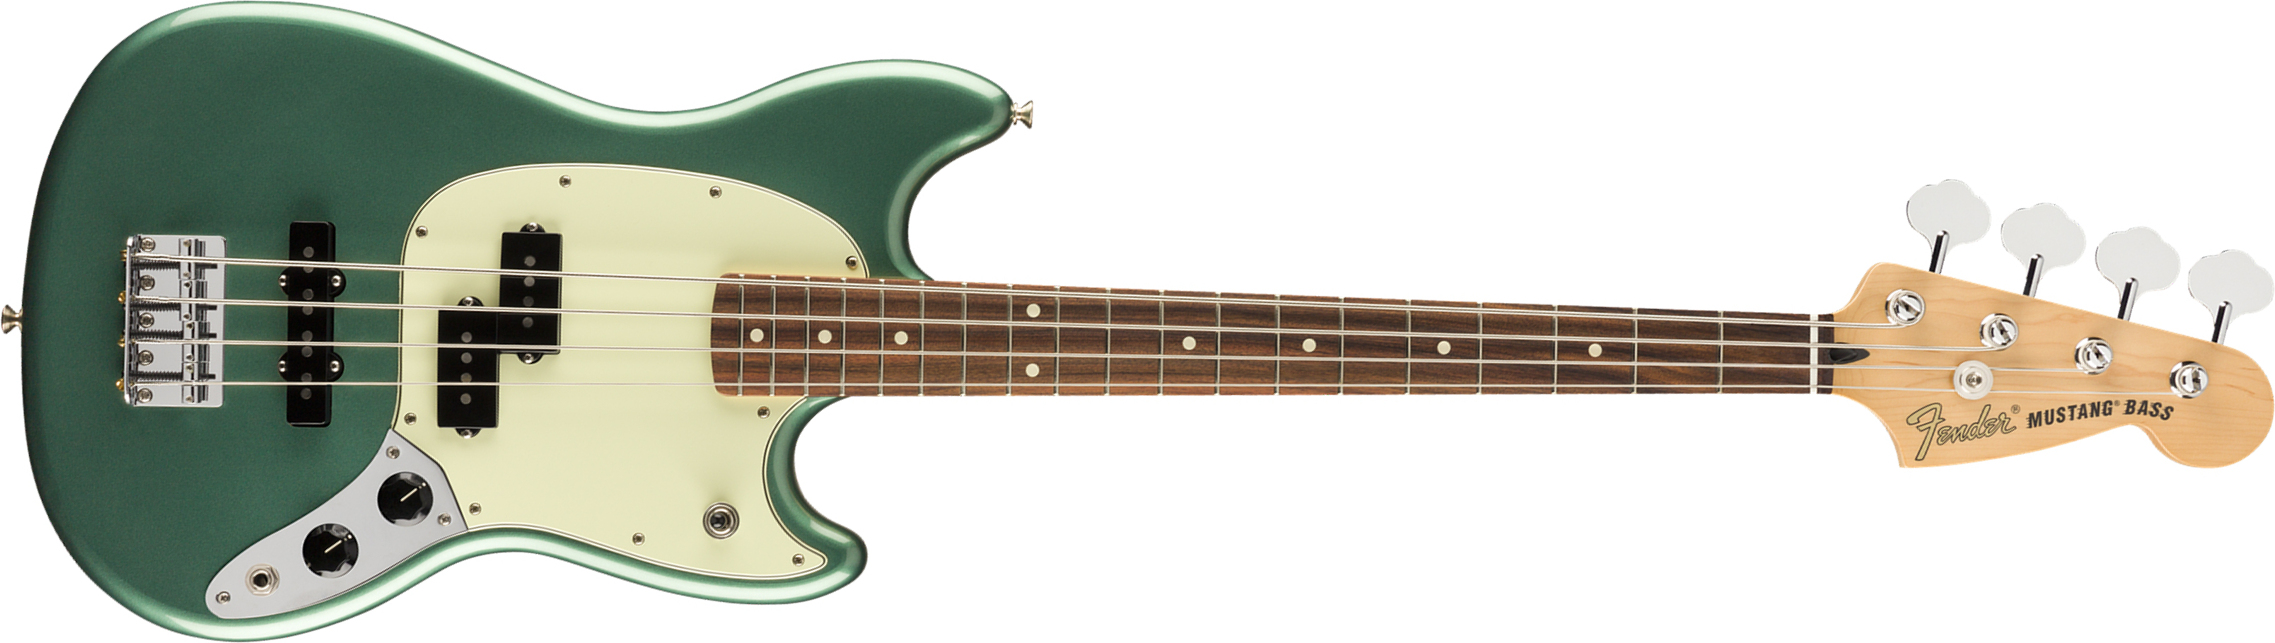 Fender Mustang Bass Pj Player Ltd Mex Pf - Sherwood Green Metallic - Bajo eléctrico para niños - Main picture